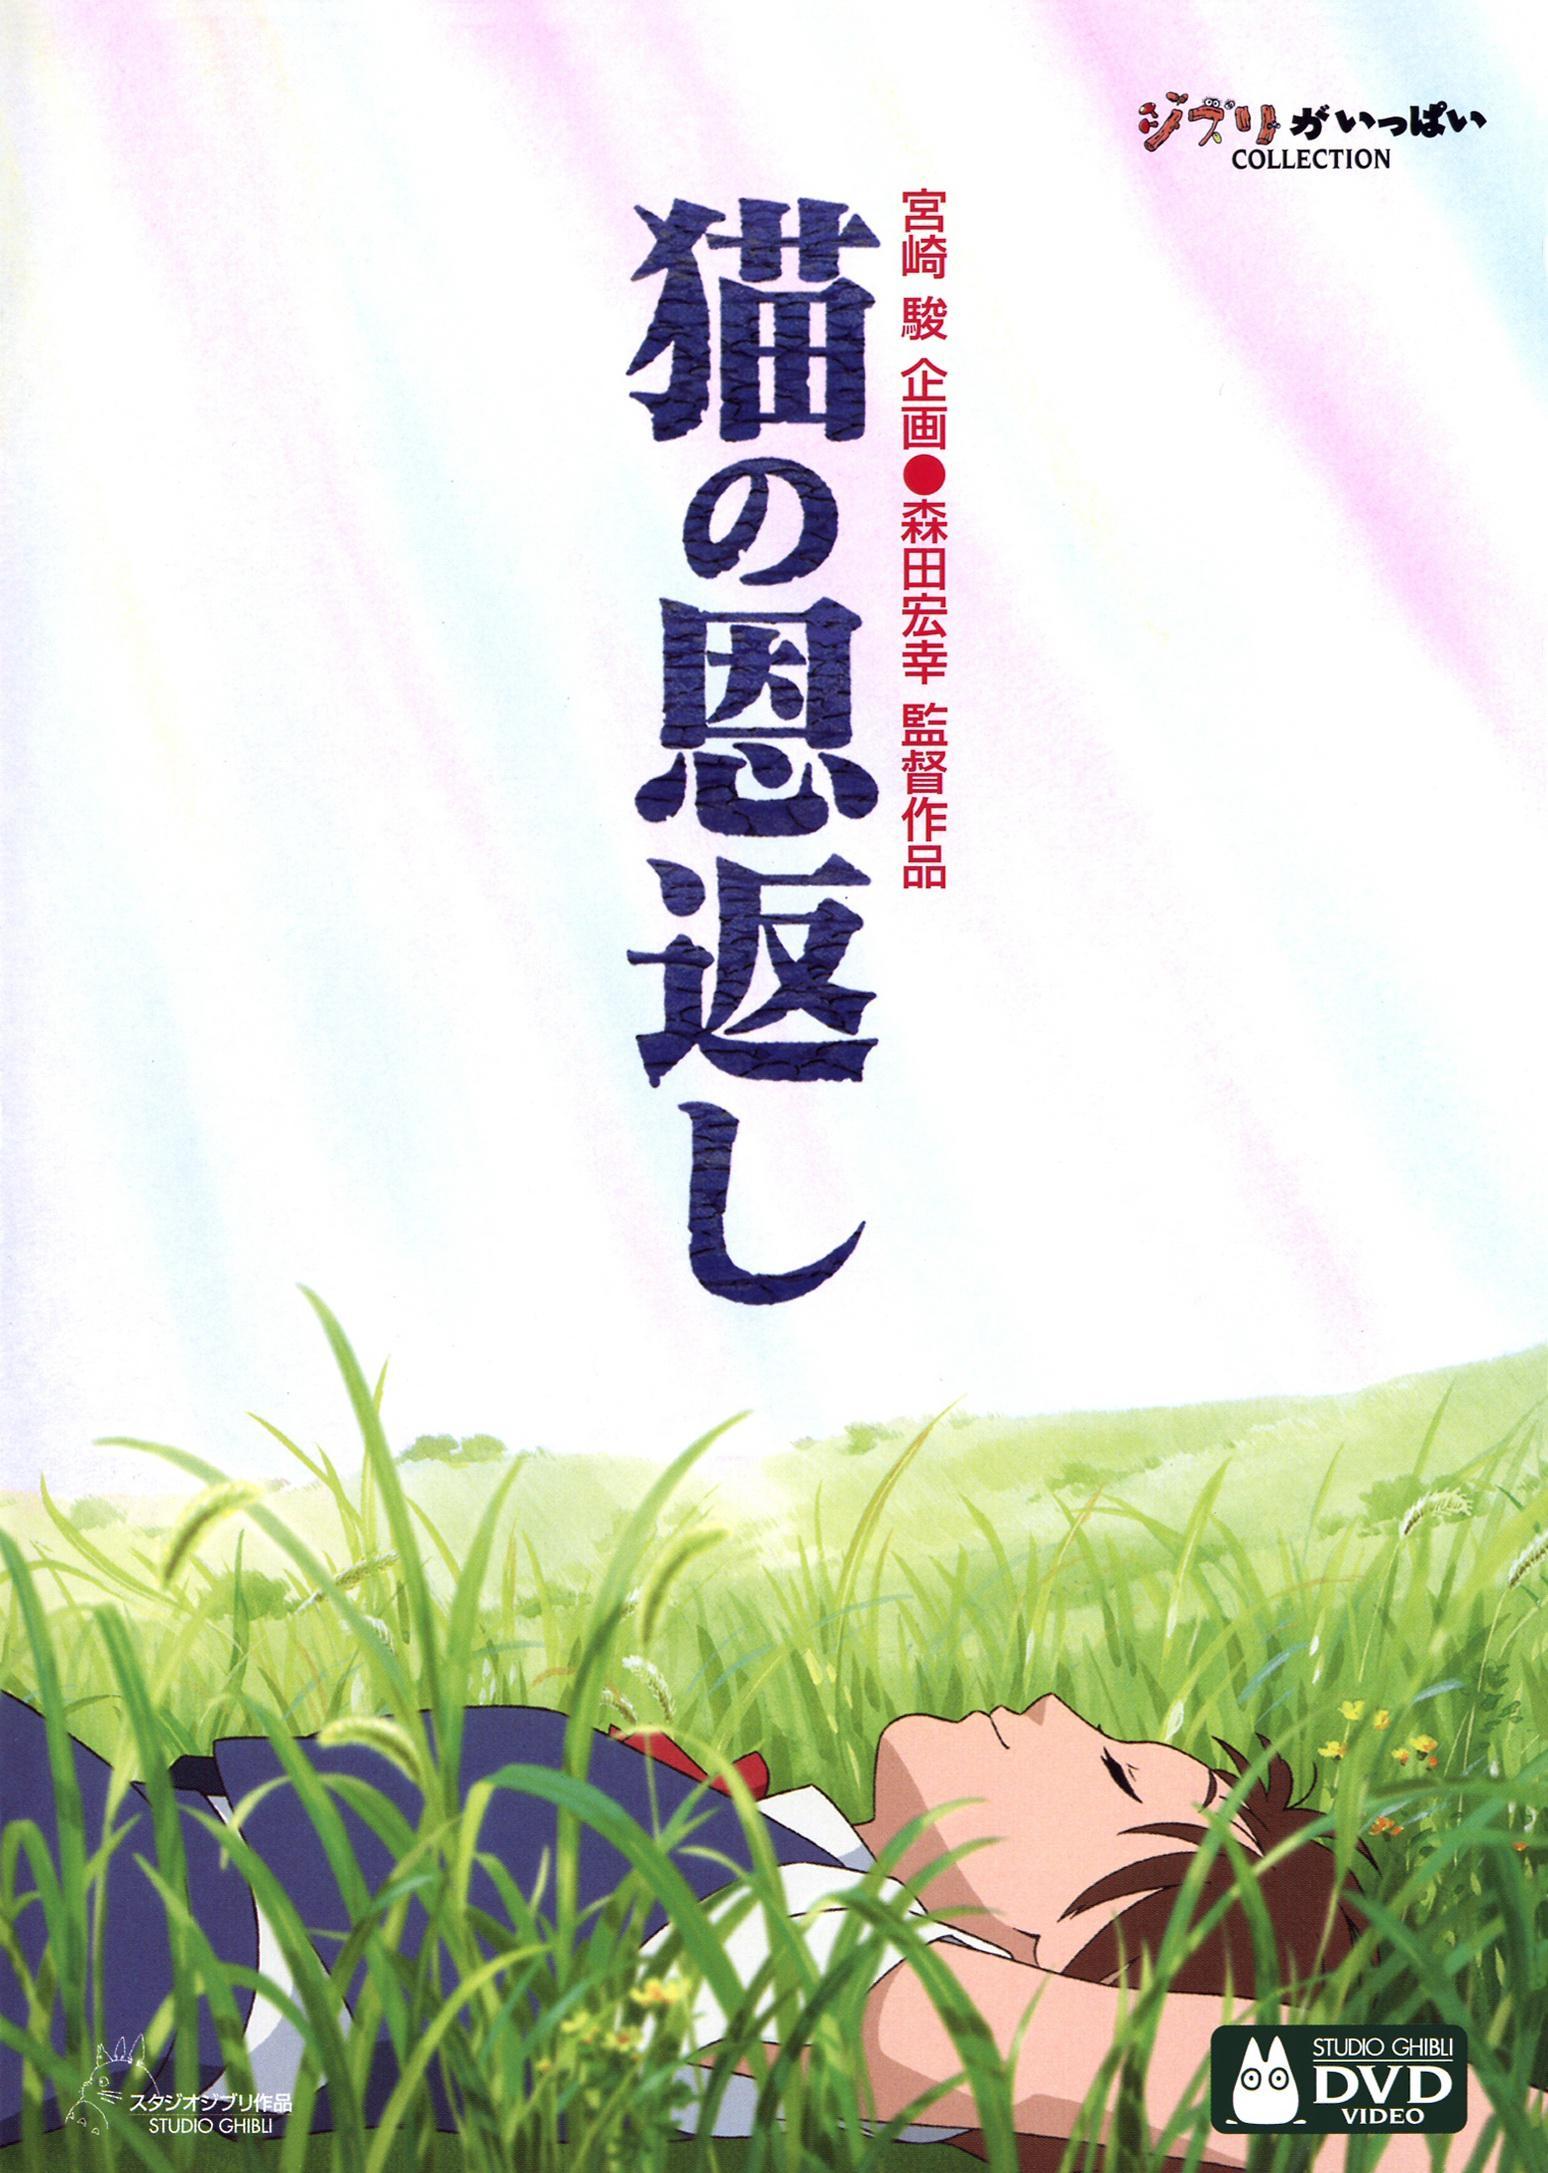 Постер фильма Возвращение кота | Neko no ongaeshi